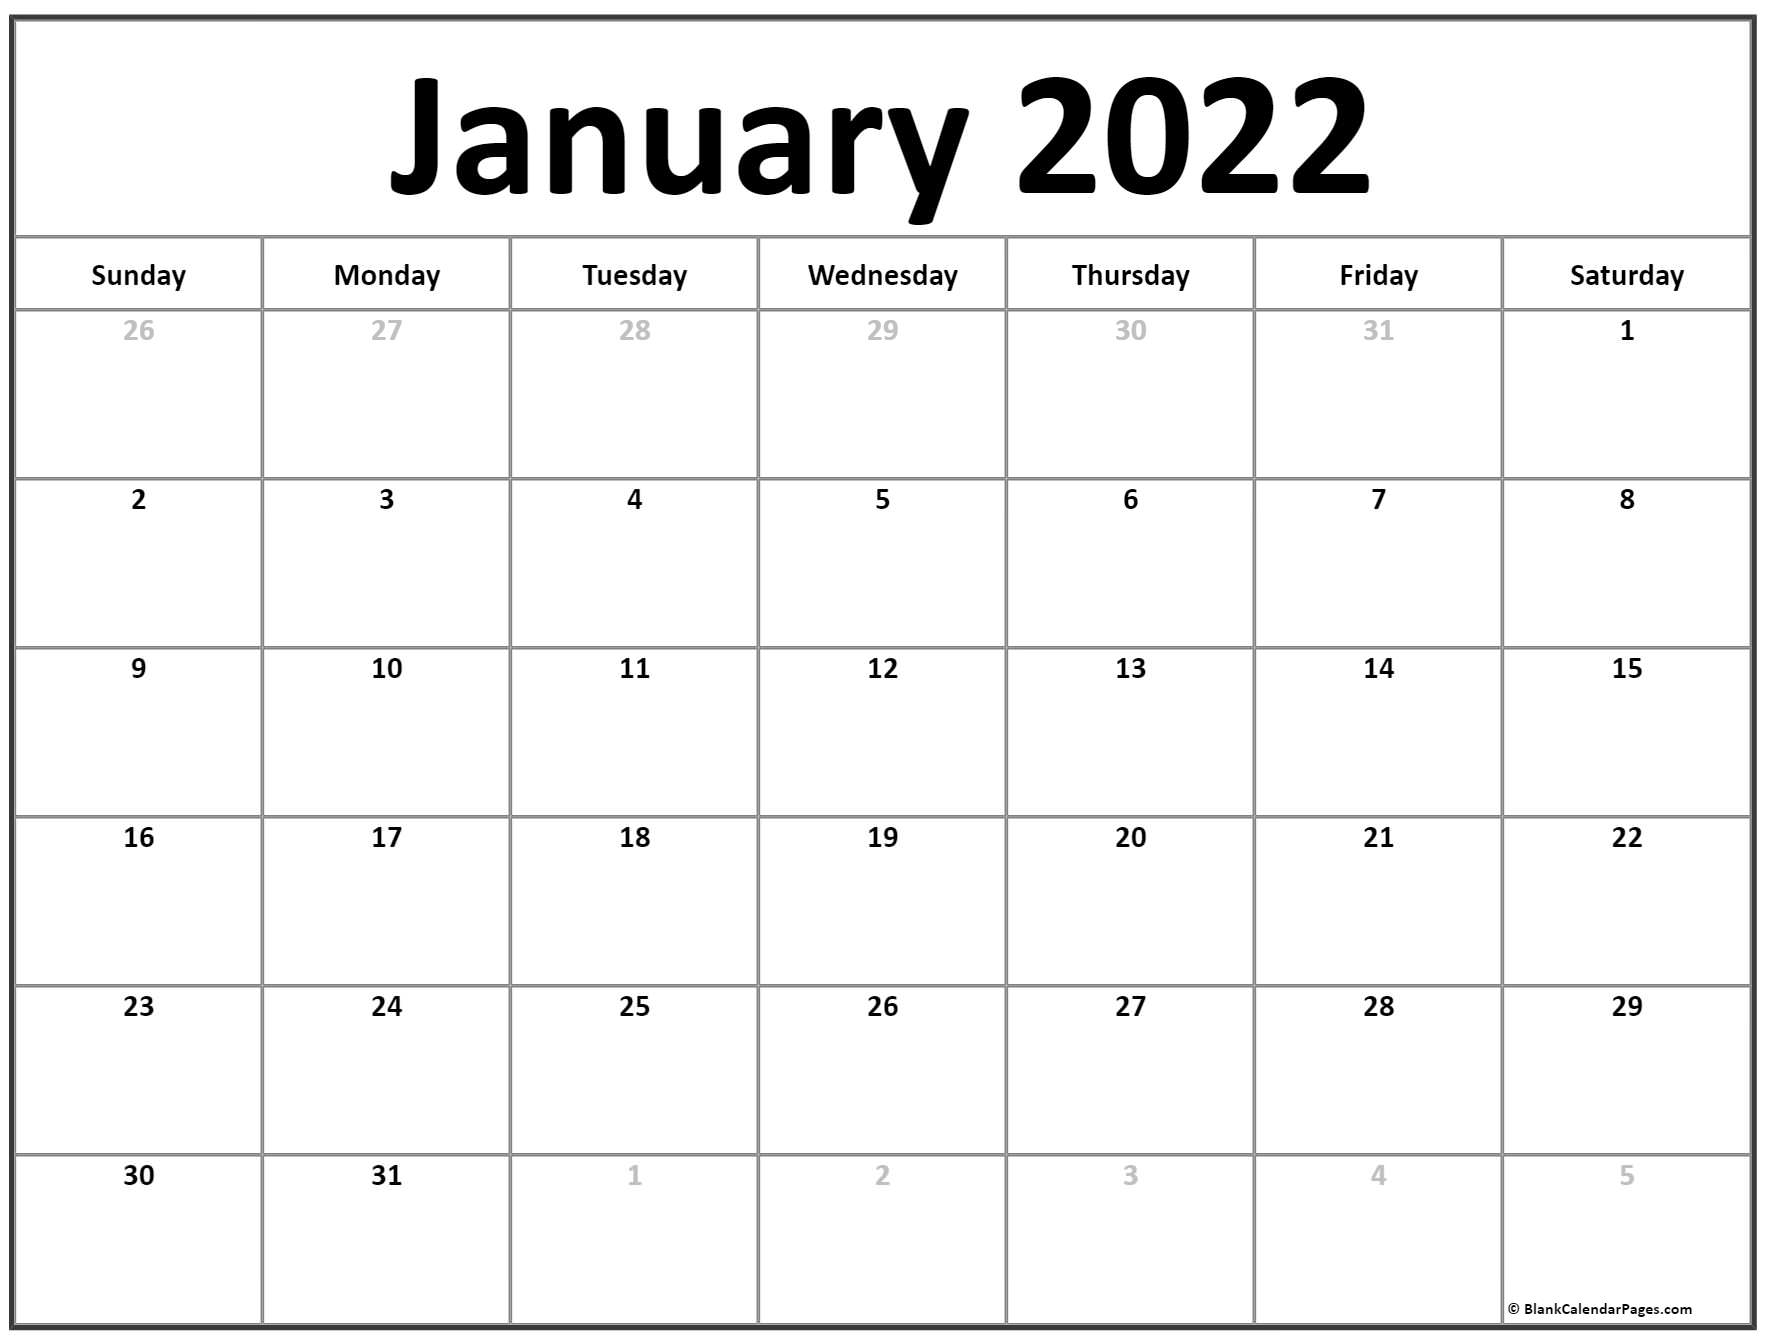 Get January 1 2022 Calendar